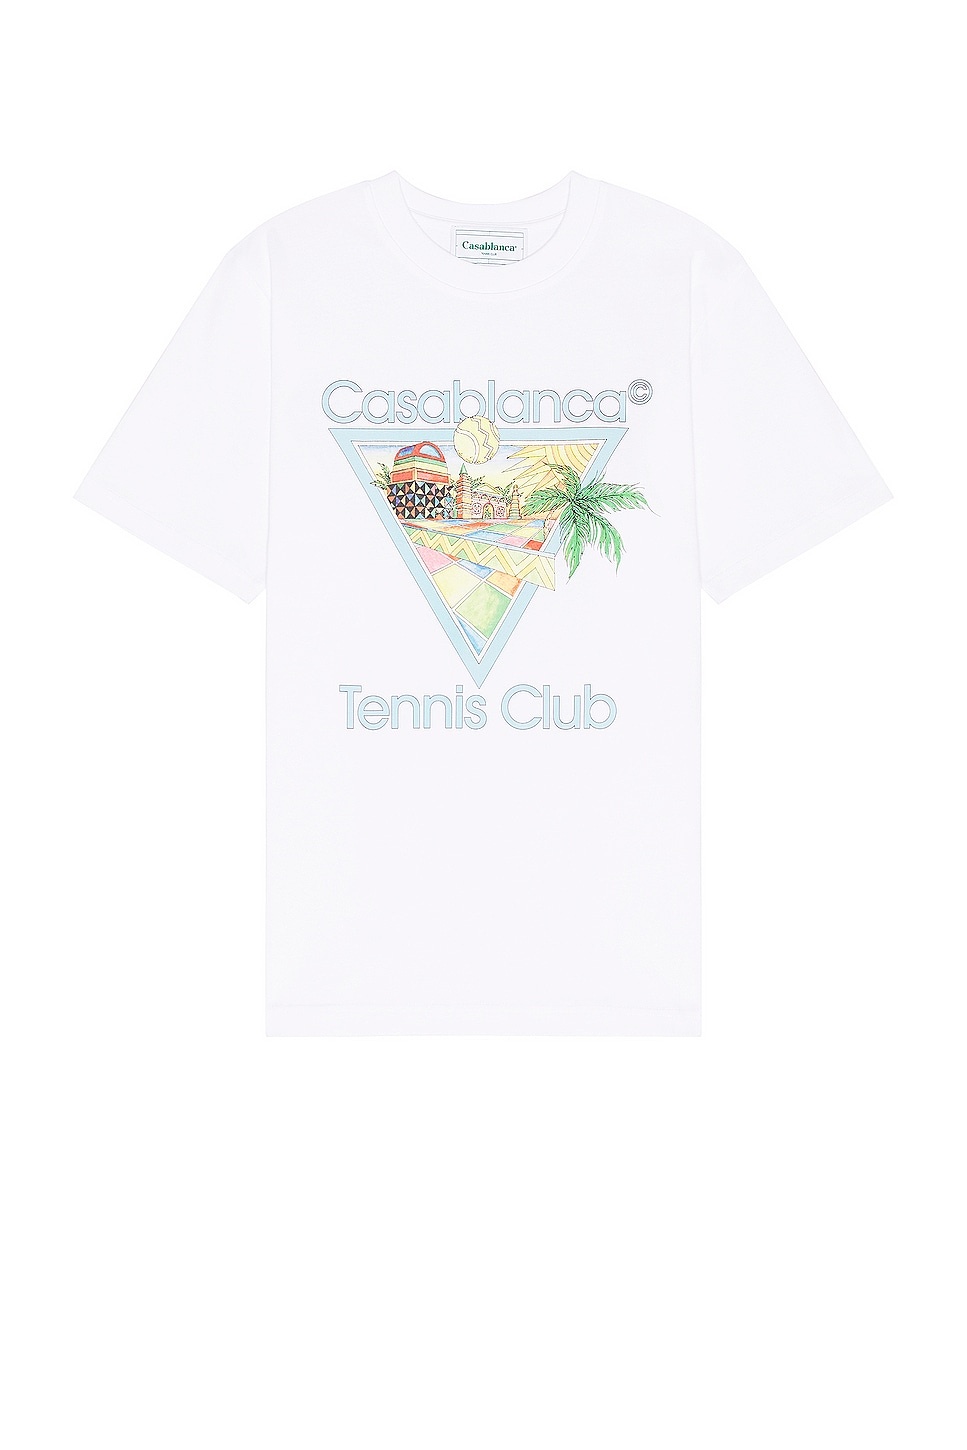 Afro Cubism Tennis Club Printed T-shirt - 1